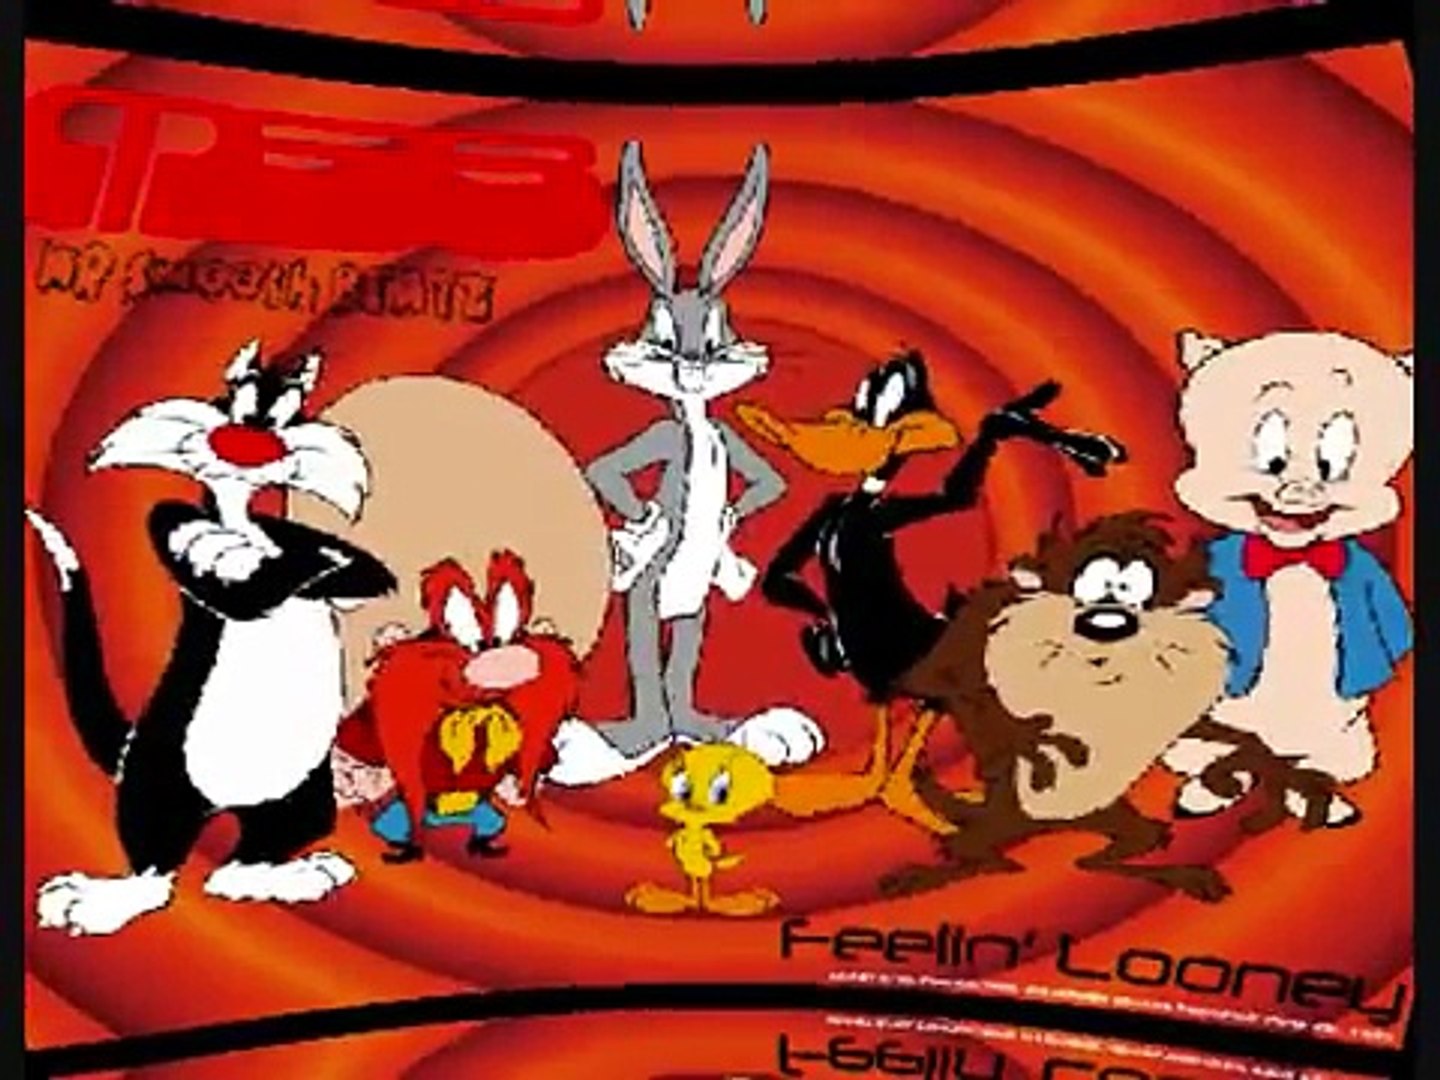 Looney Tunes (Rap/Hip-Hop Beat) - Feelin Looney - Mr. Smooth Beatz